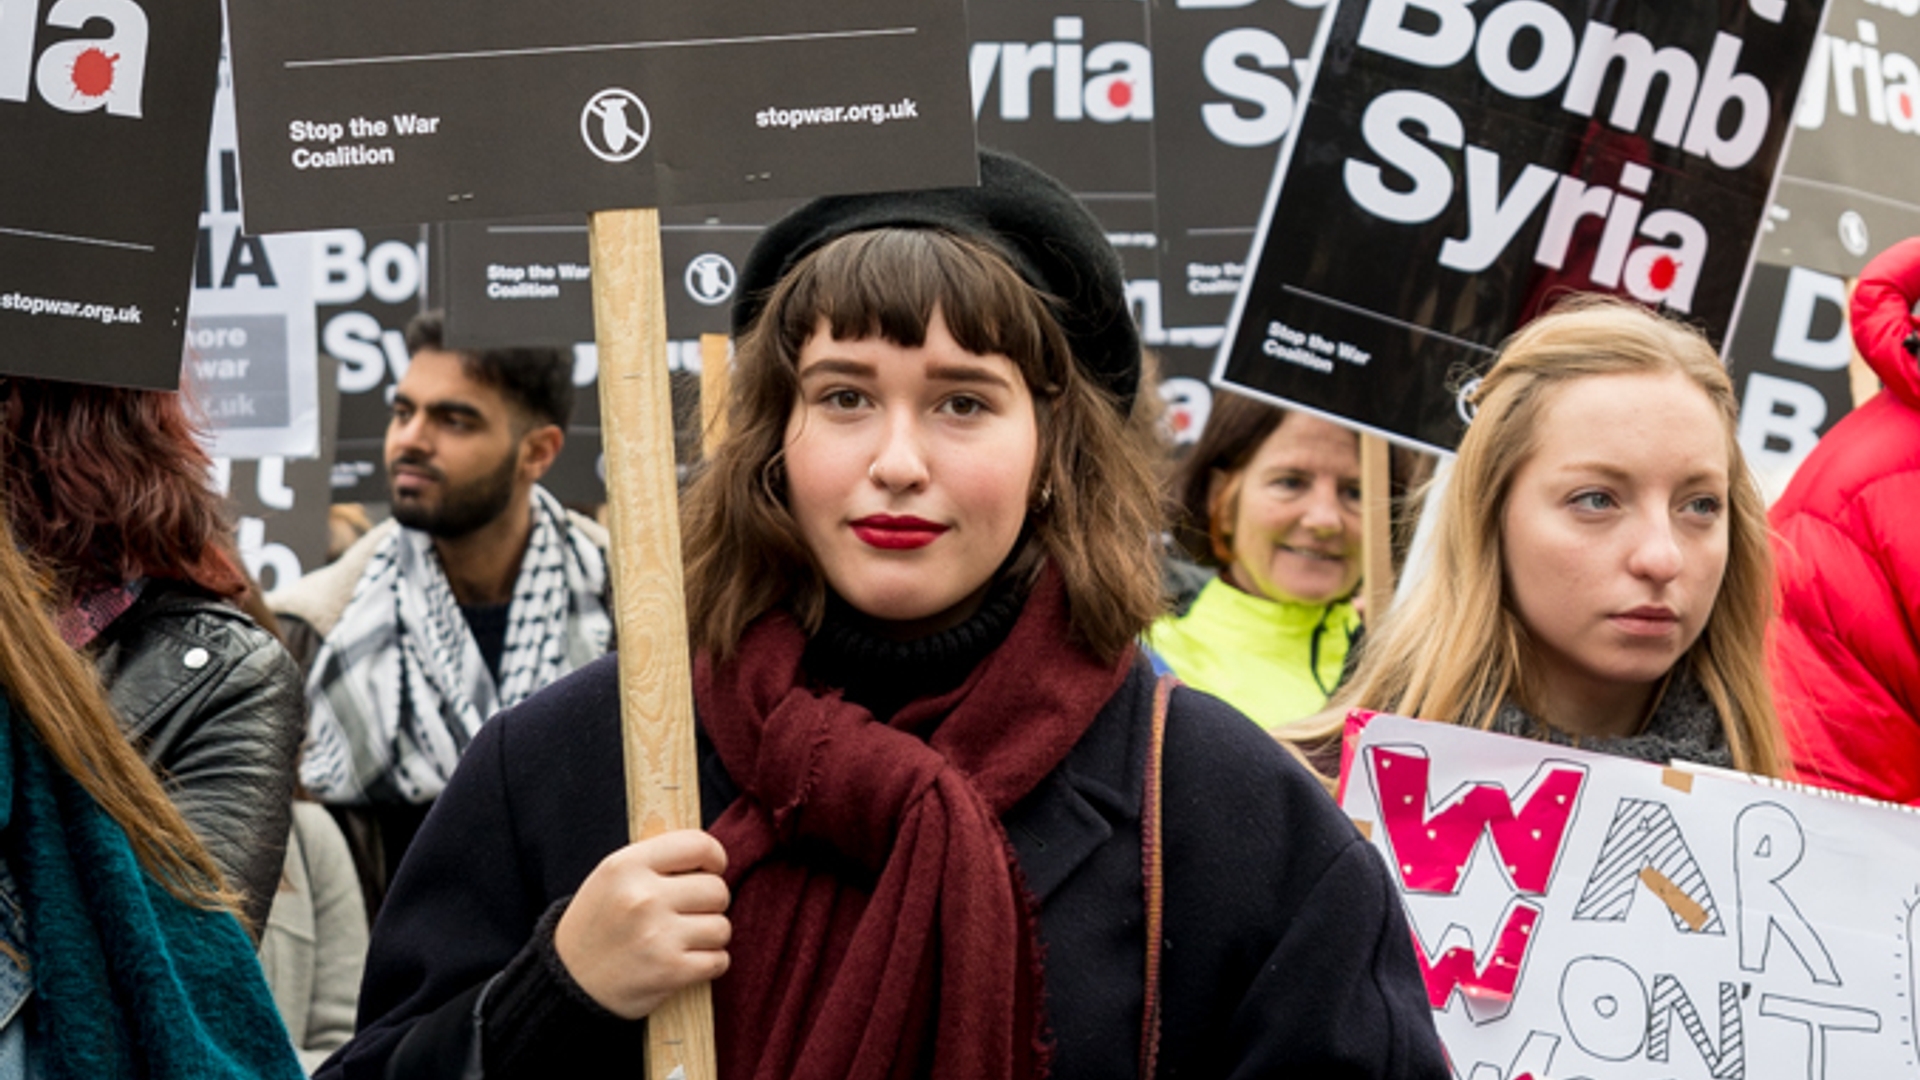 Don't Bomb Syria - London protest 28 Nov 2015